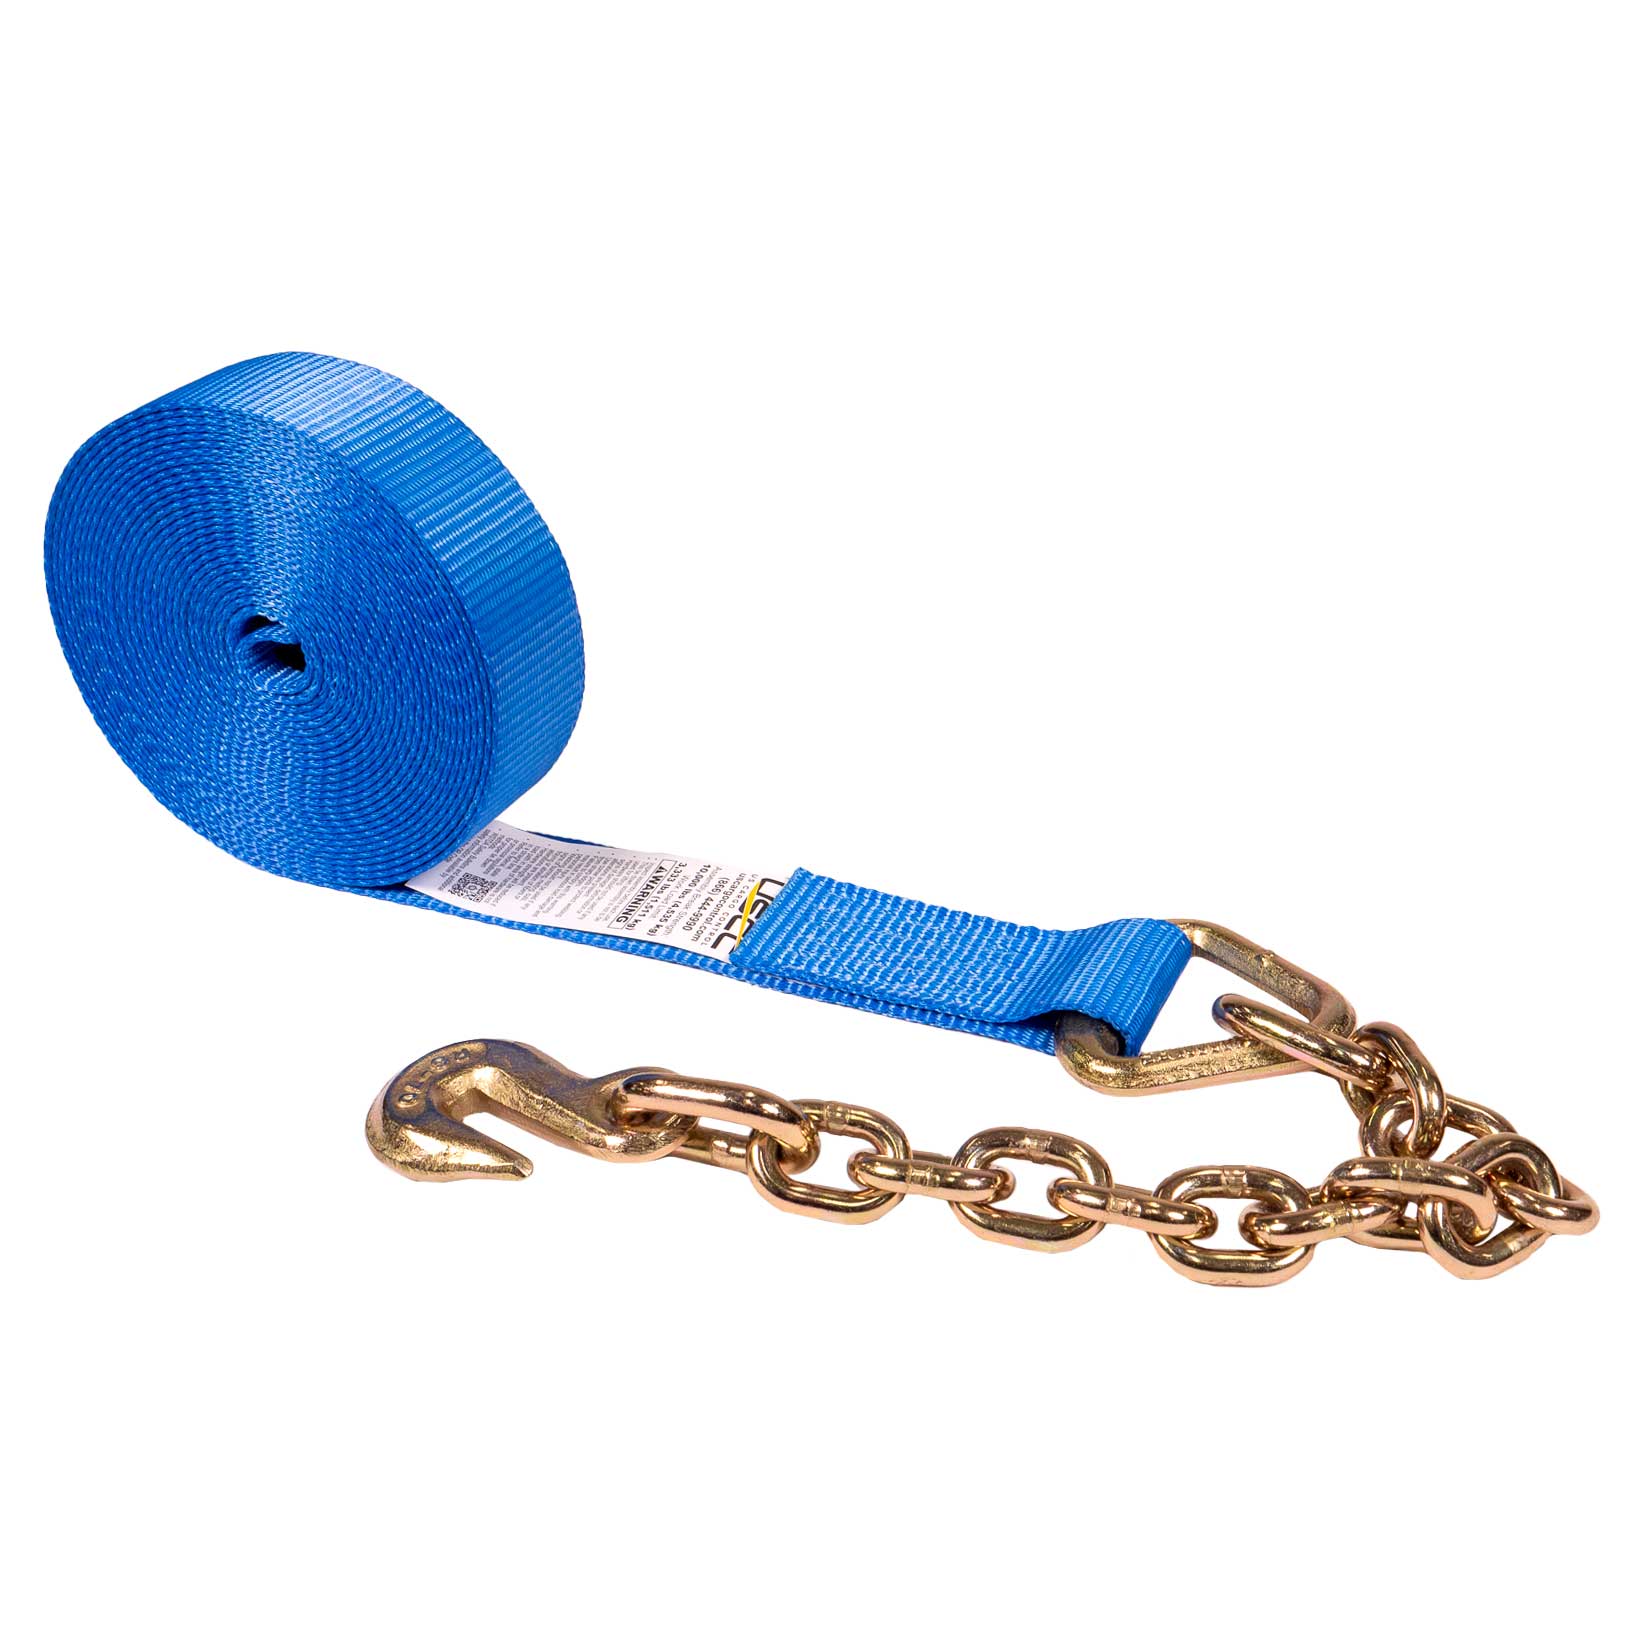 30' winch strap -  2" blue chain end winch strap